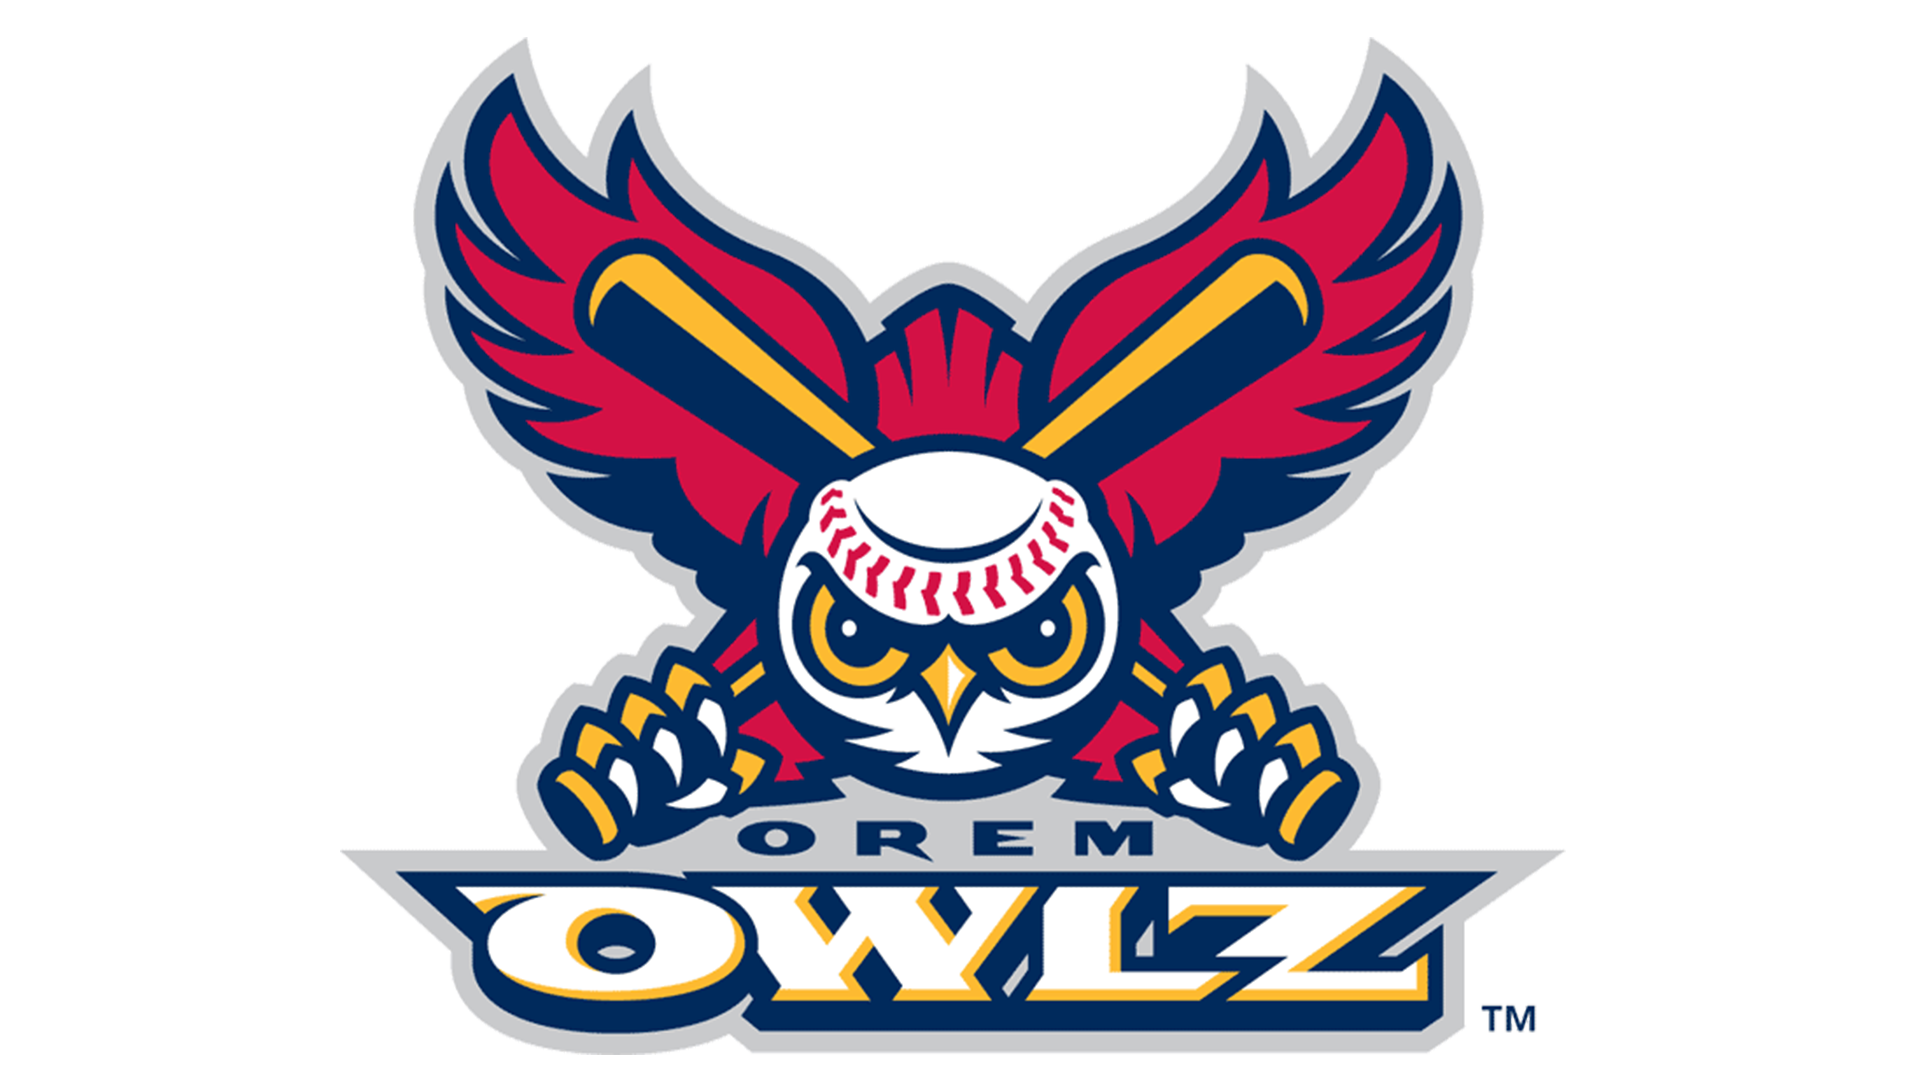 Meaning Orem Owlz logo and symbol | history and evolution